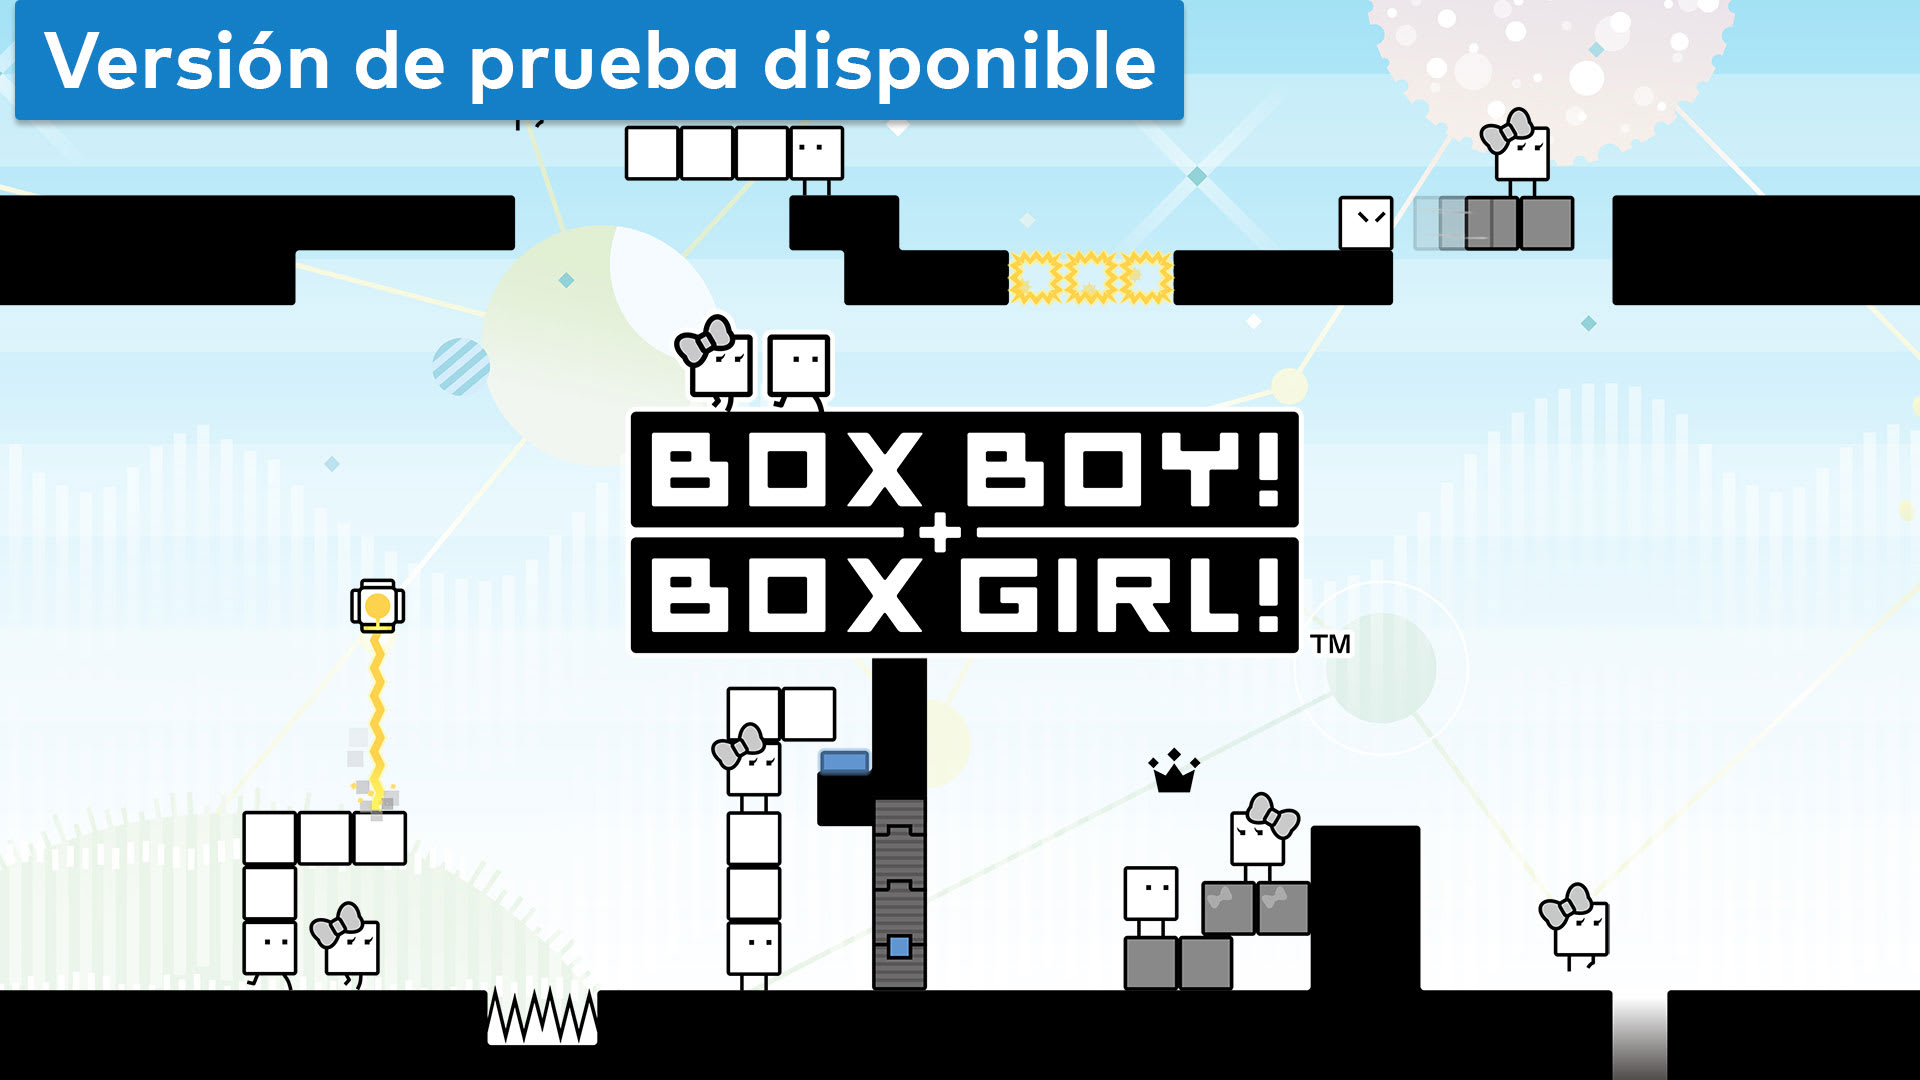 BOXBOY! + BOXGIRL!™ 